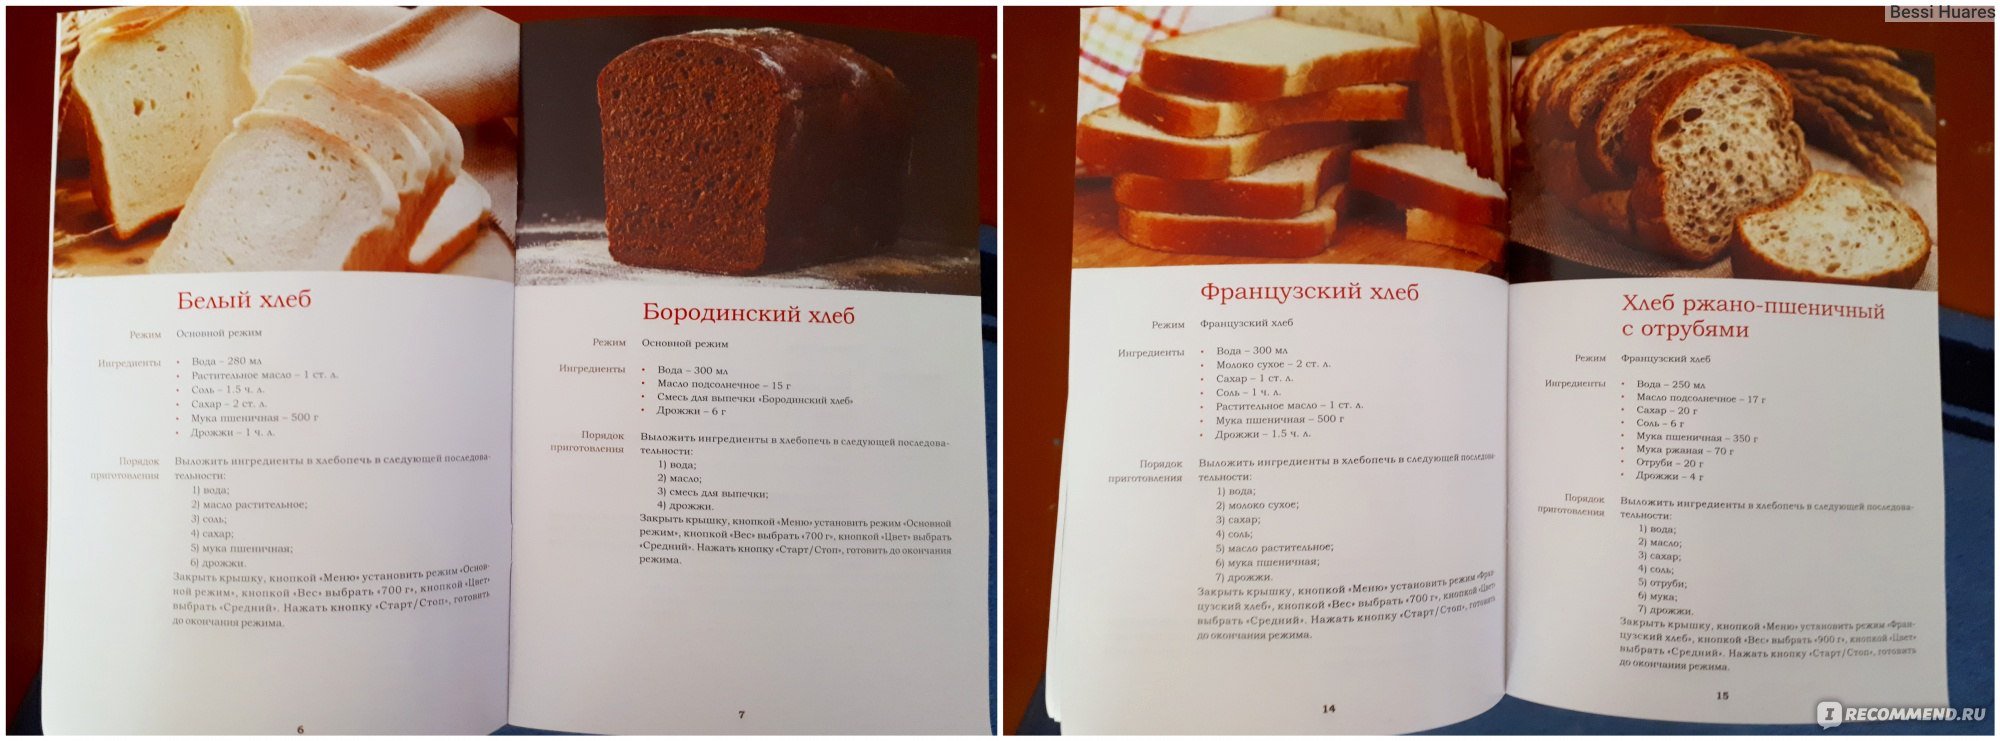 Рецепт теста в хлебопечке мулинекс. Книга рецептов для хлебопечки Бинатон. Книжка с рецептами для хлебопечки. Рецепты для хлебопечки Бинатон.